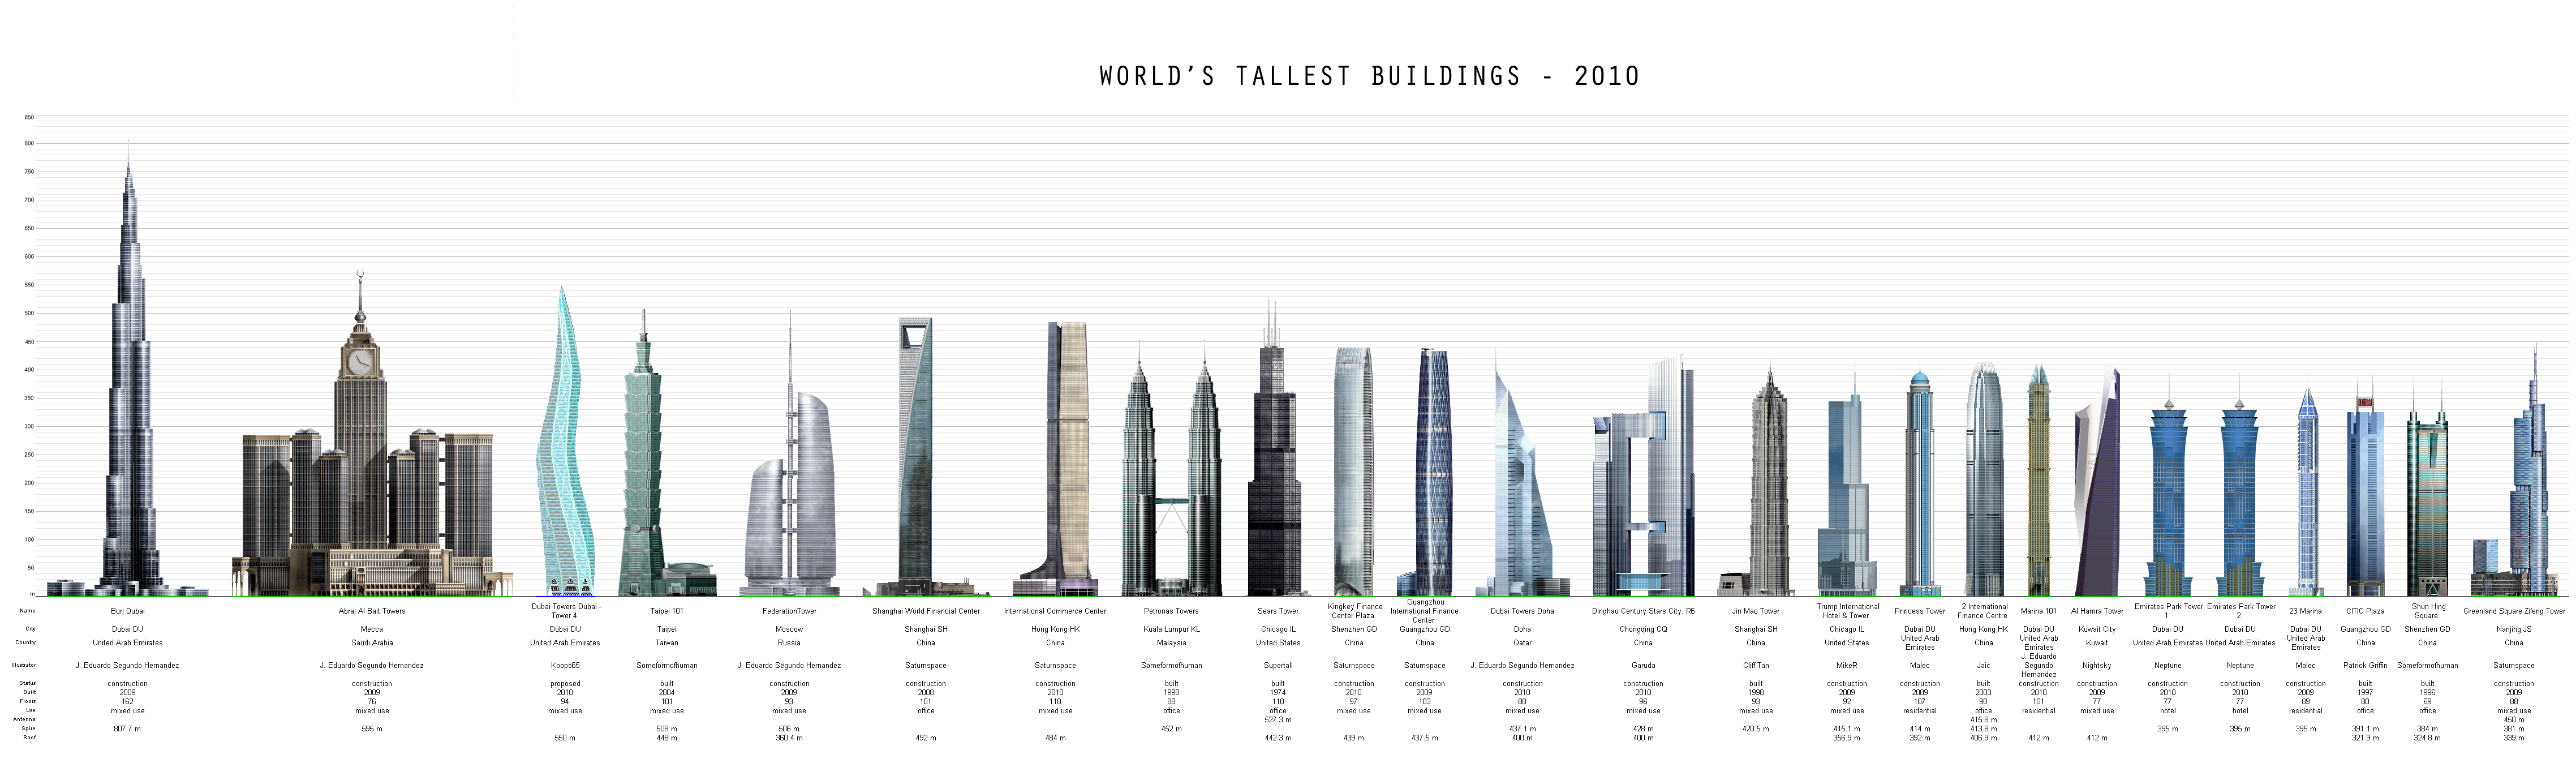 World's tallest buildings, 2010